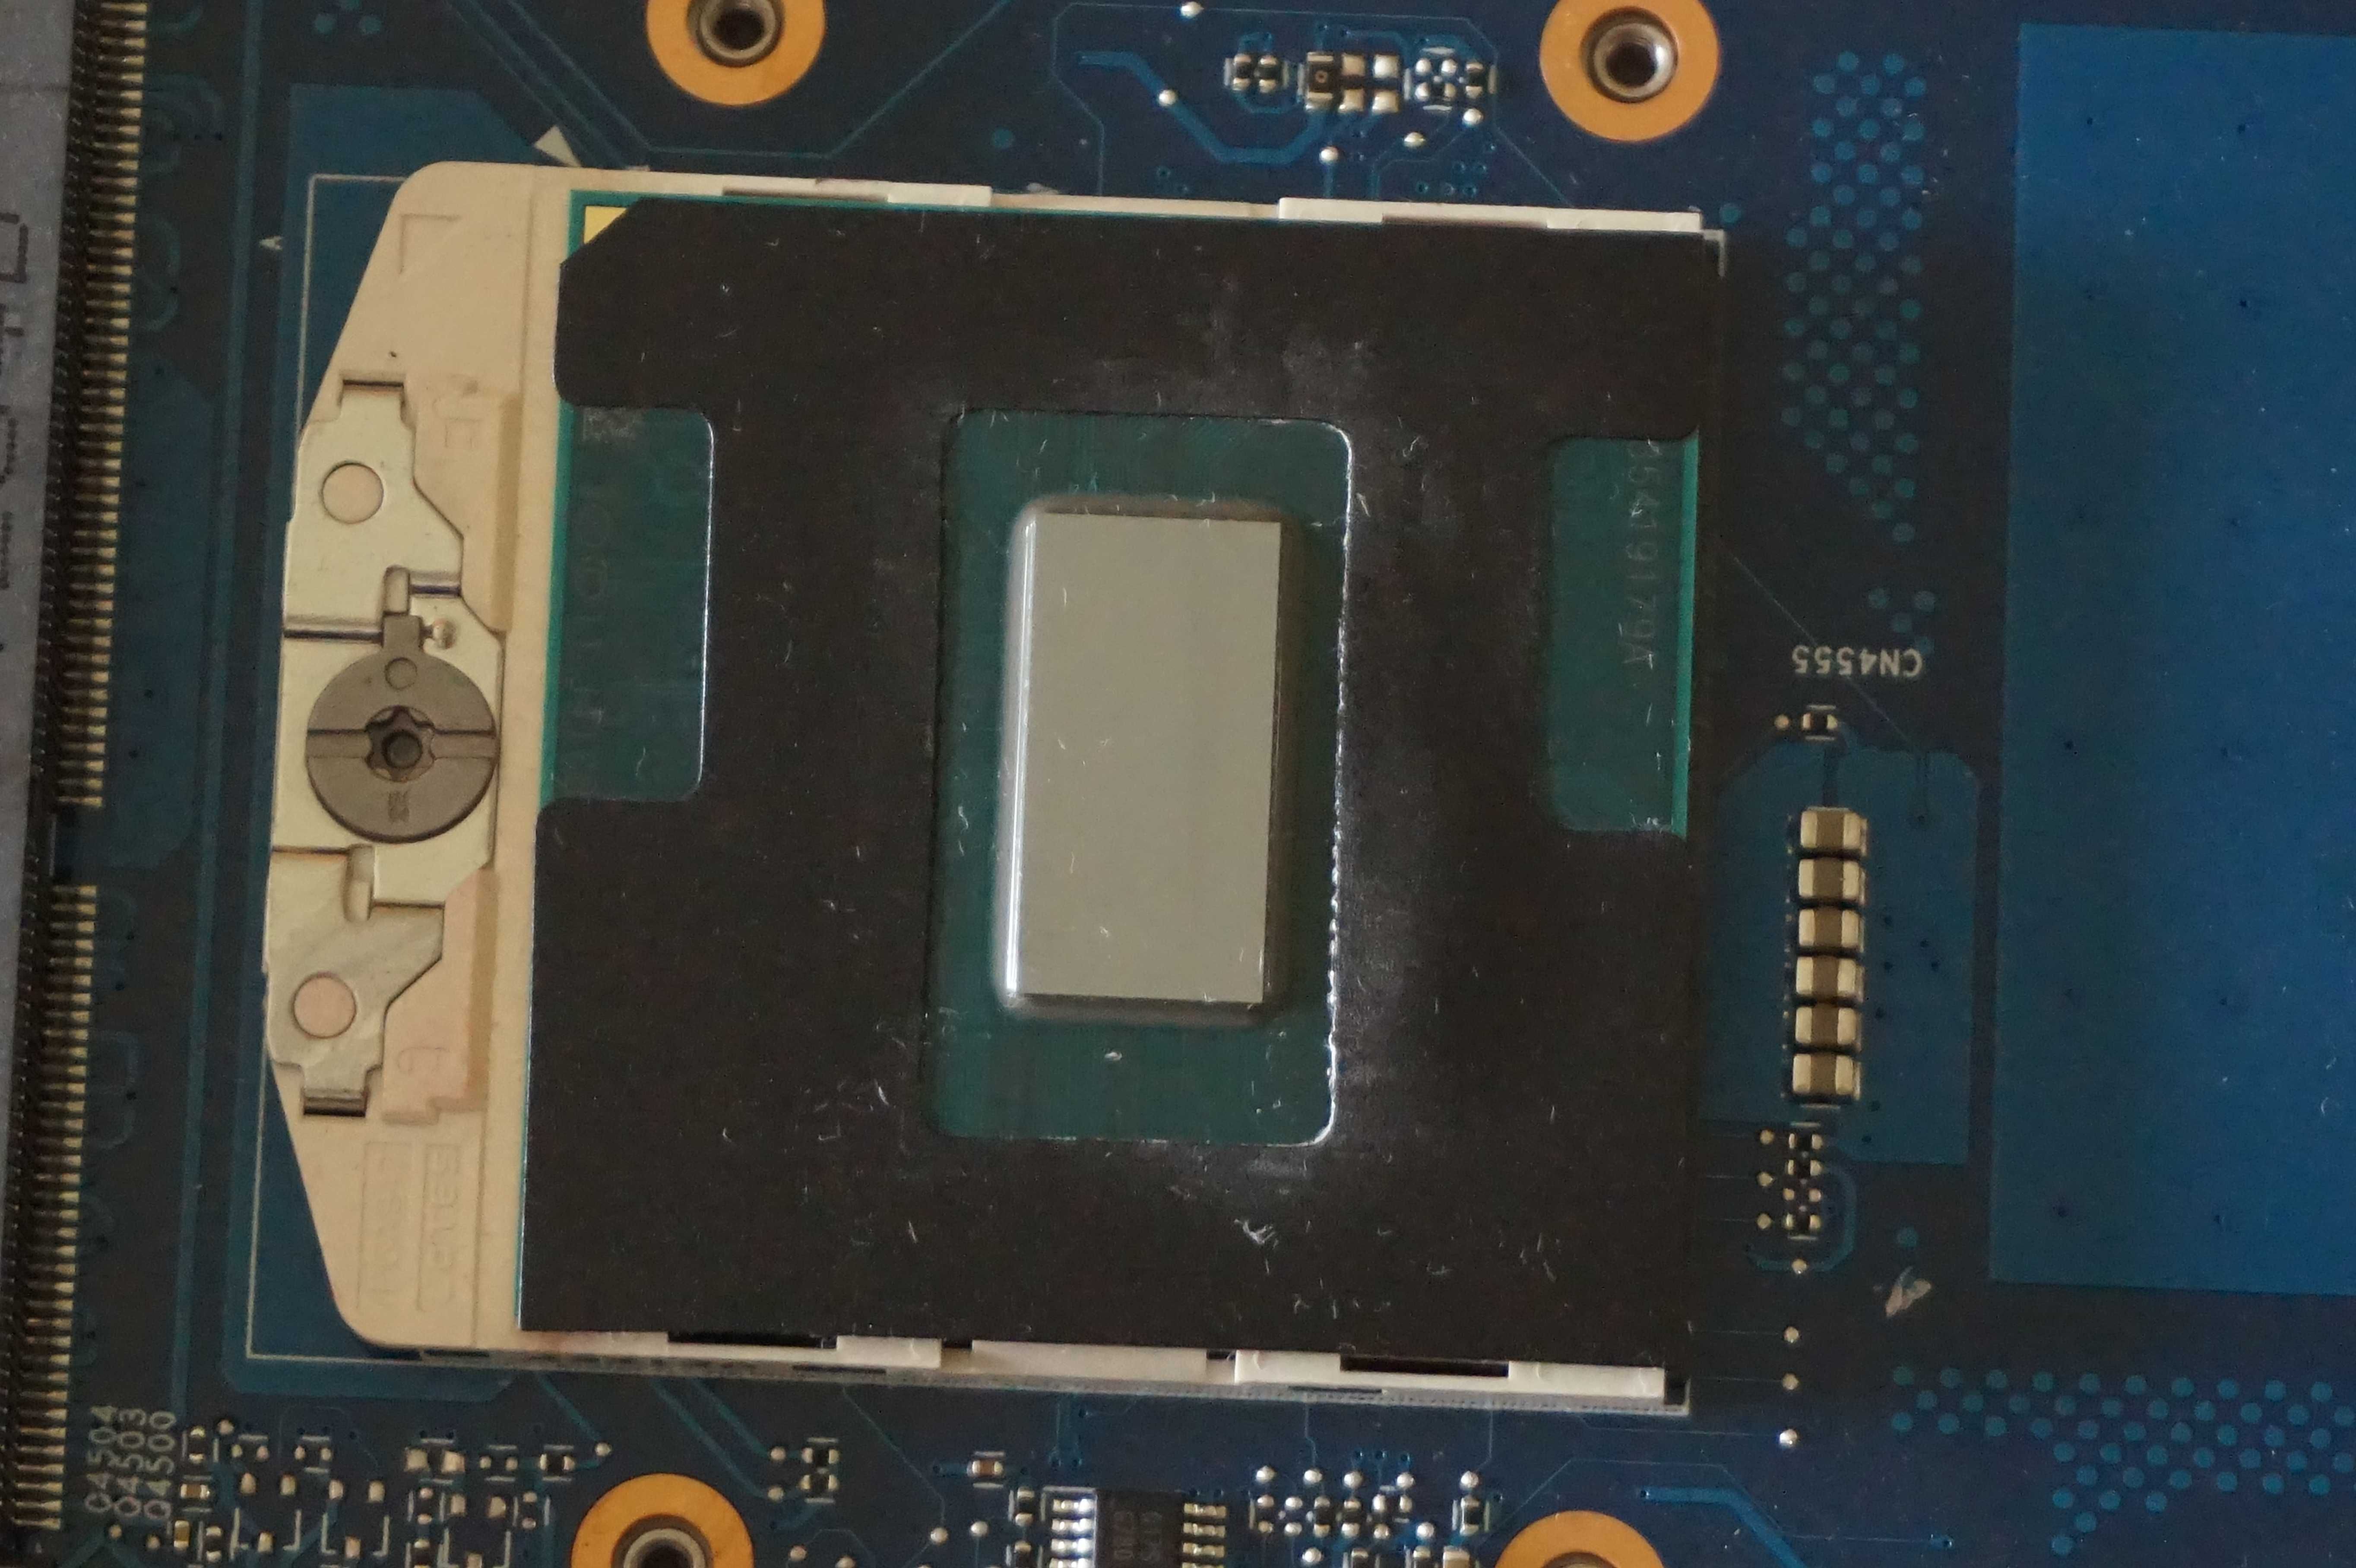 Procesor laptop intel core i5-4200M 2.5 Ghz do 3.10 GHz